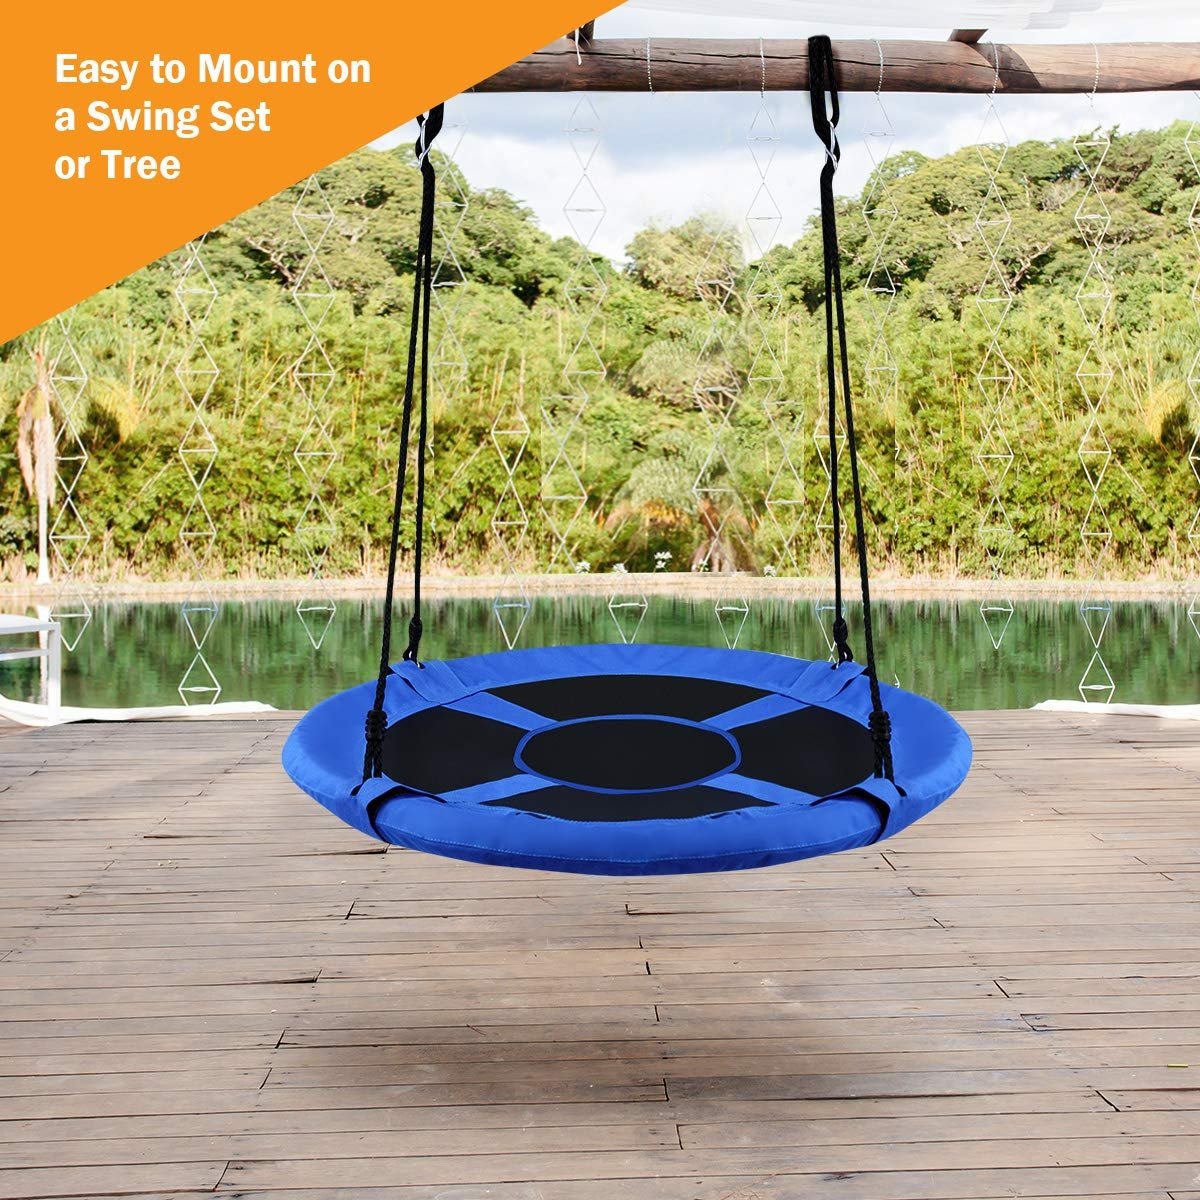 40 Inch Flying Saucer Tree Swing Indoor Outdoor Play Set, Blue - Gallery Canada